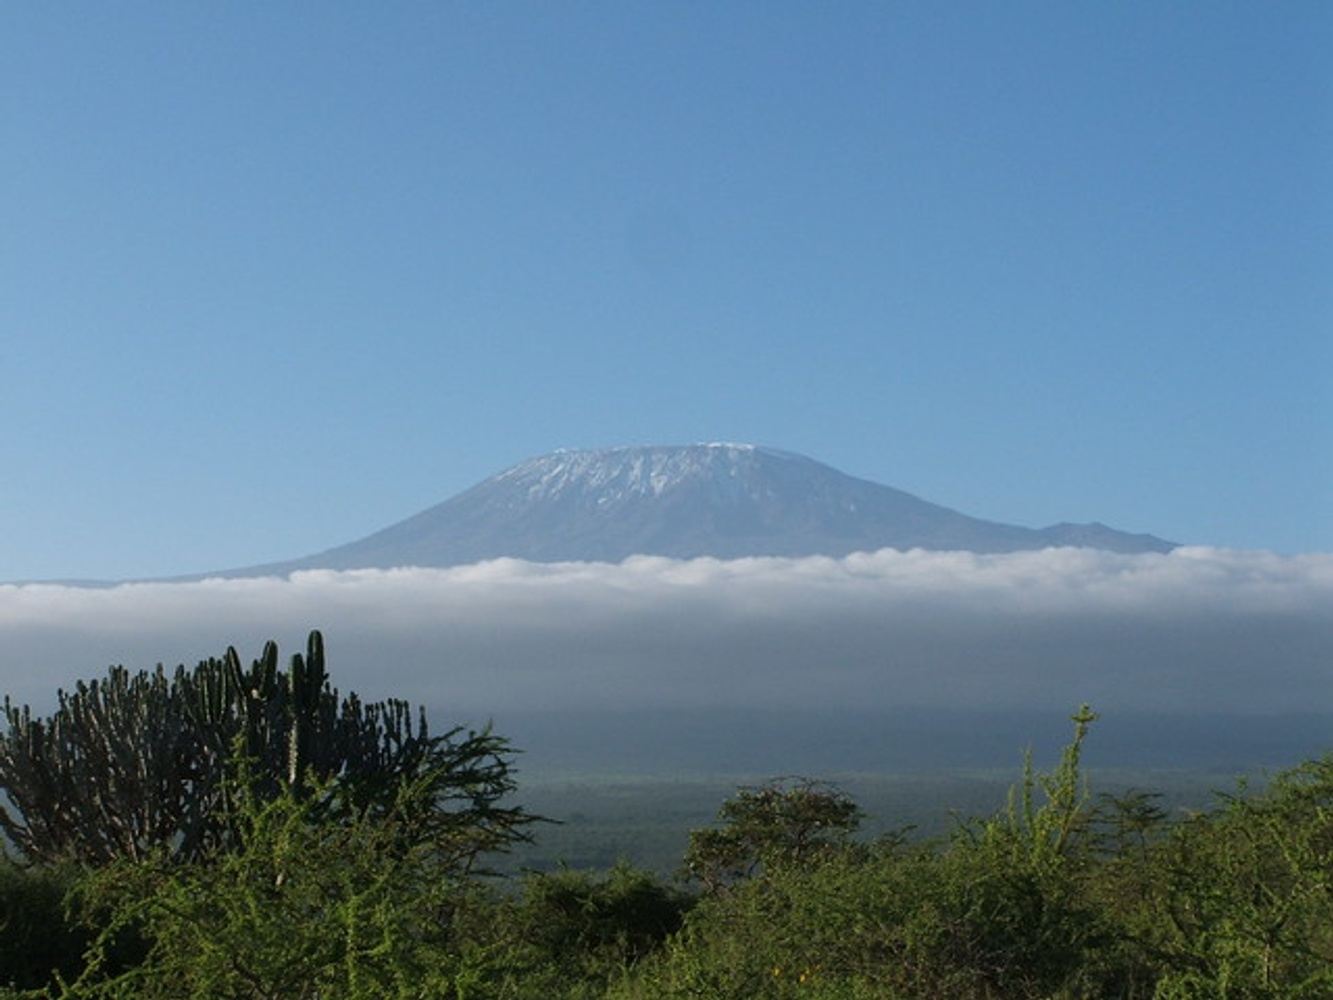 Kilimanjaro Climb via MARANGU Route